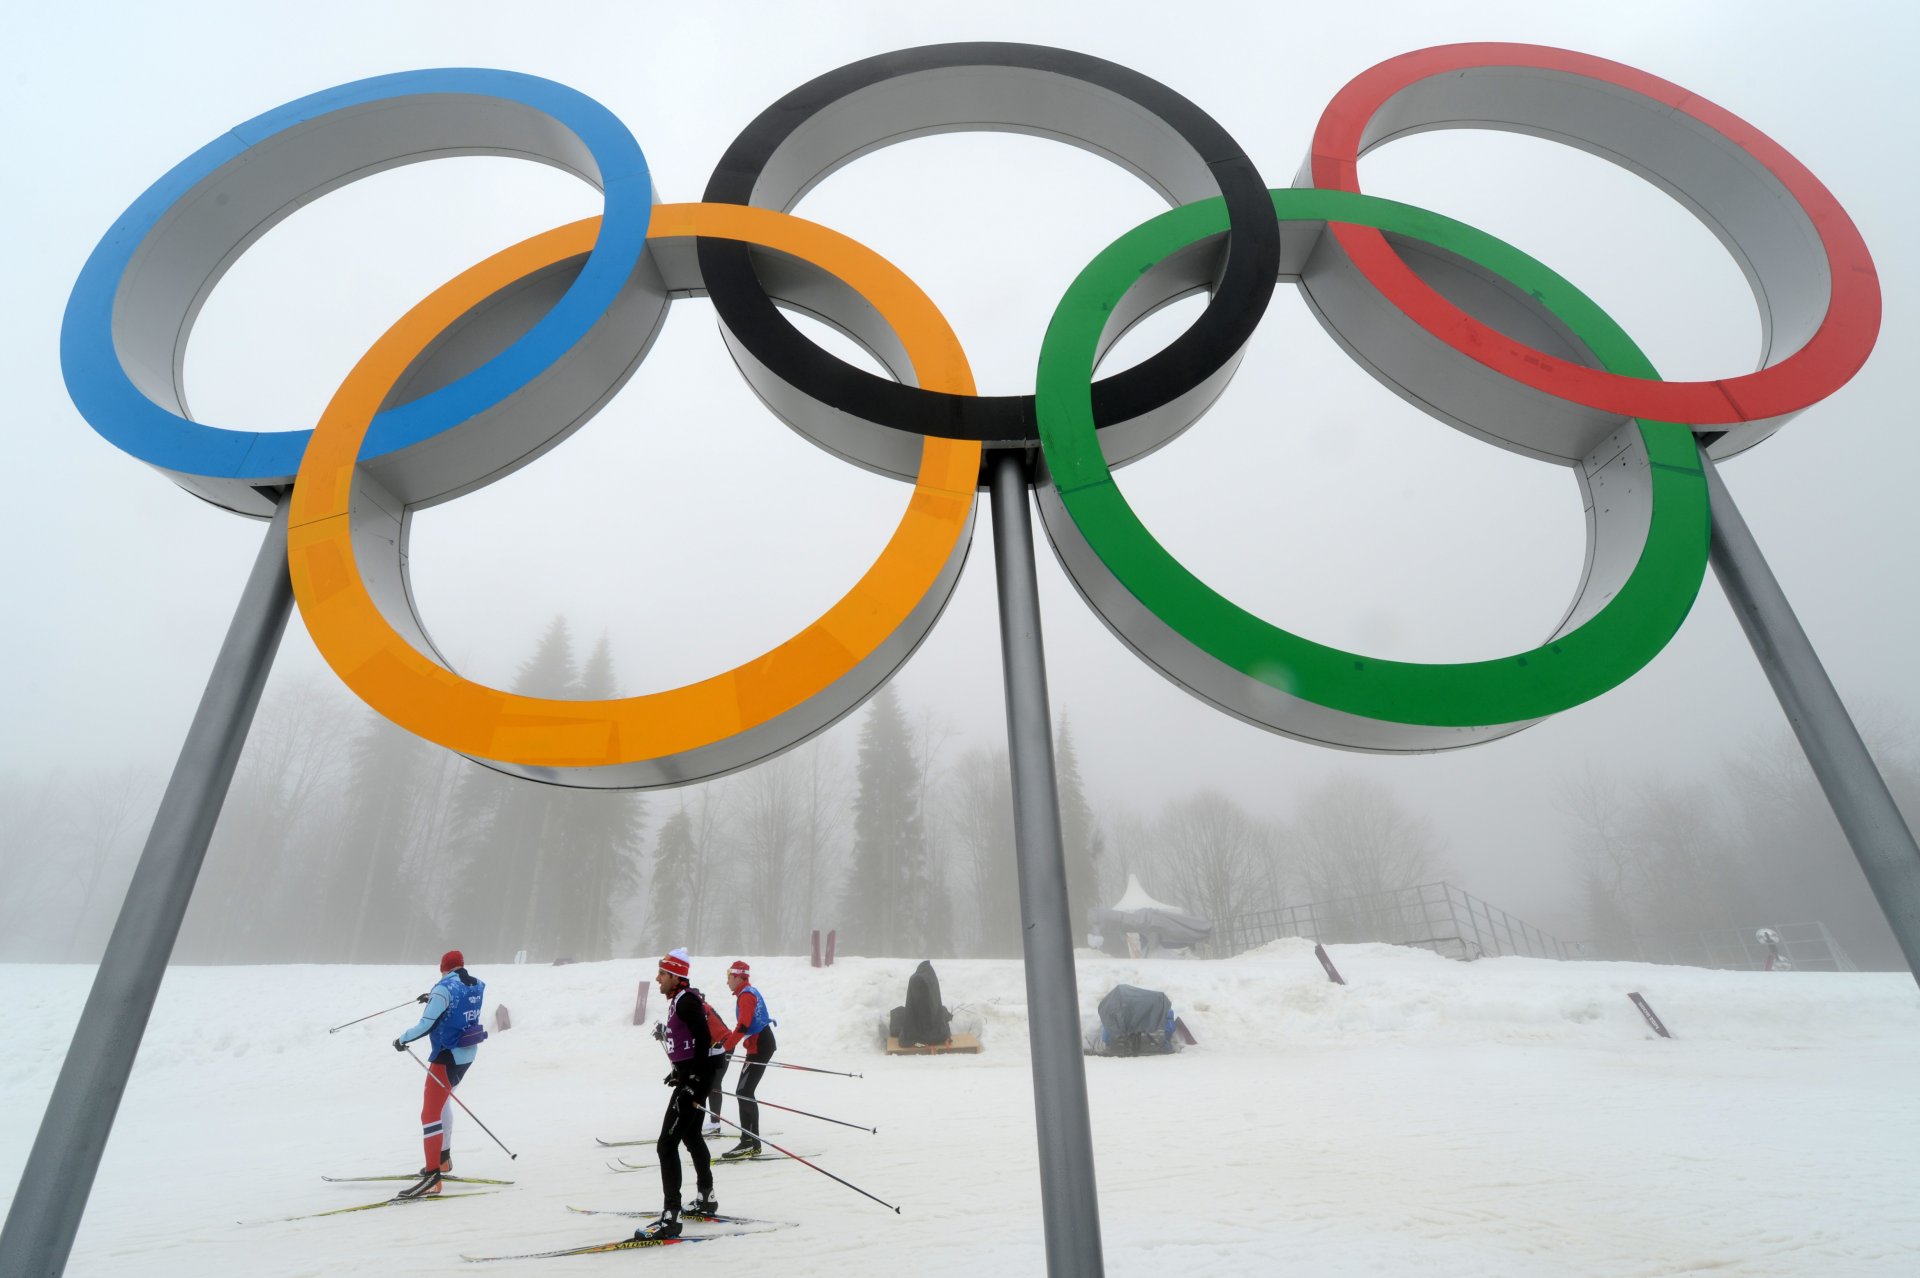 олимпийские кольца небо снизу лыжники комлекс лаура сочи 2014 россия зима лес туман снег